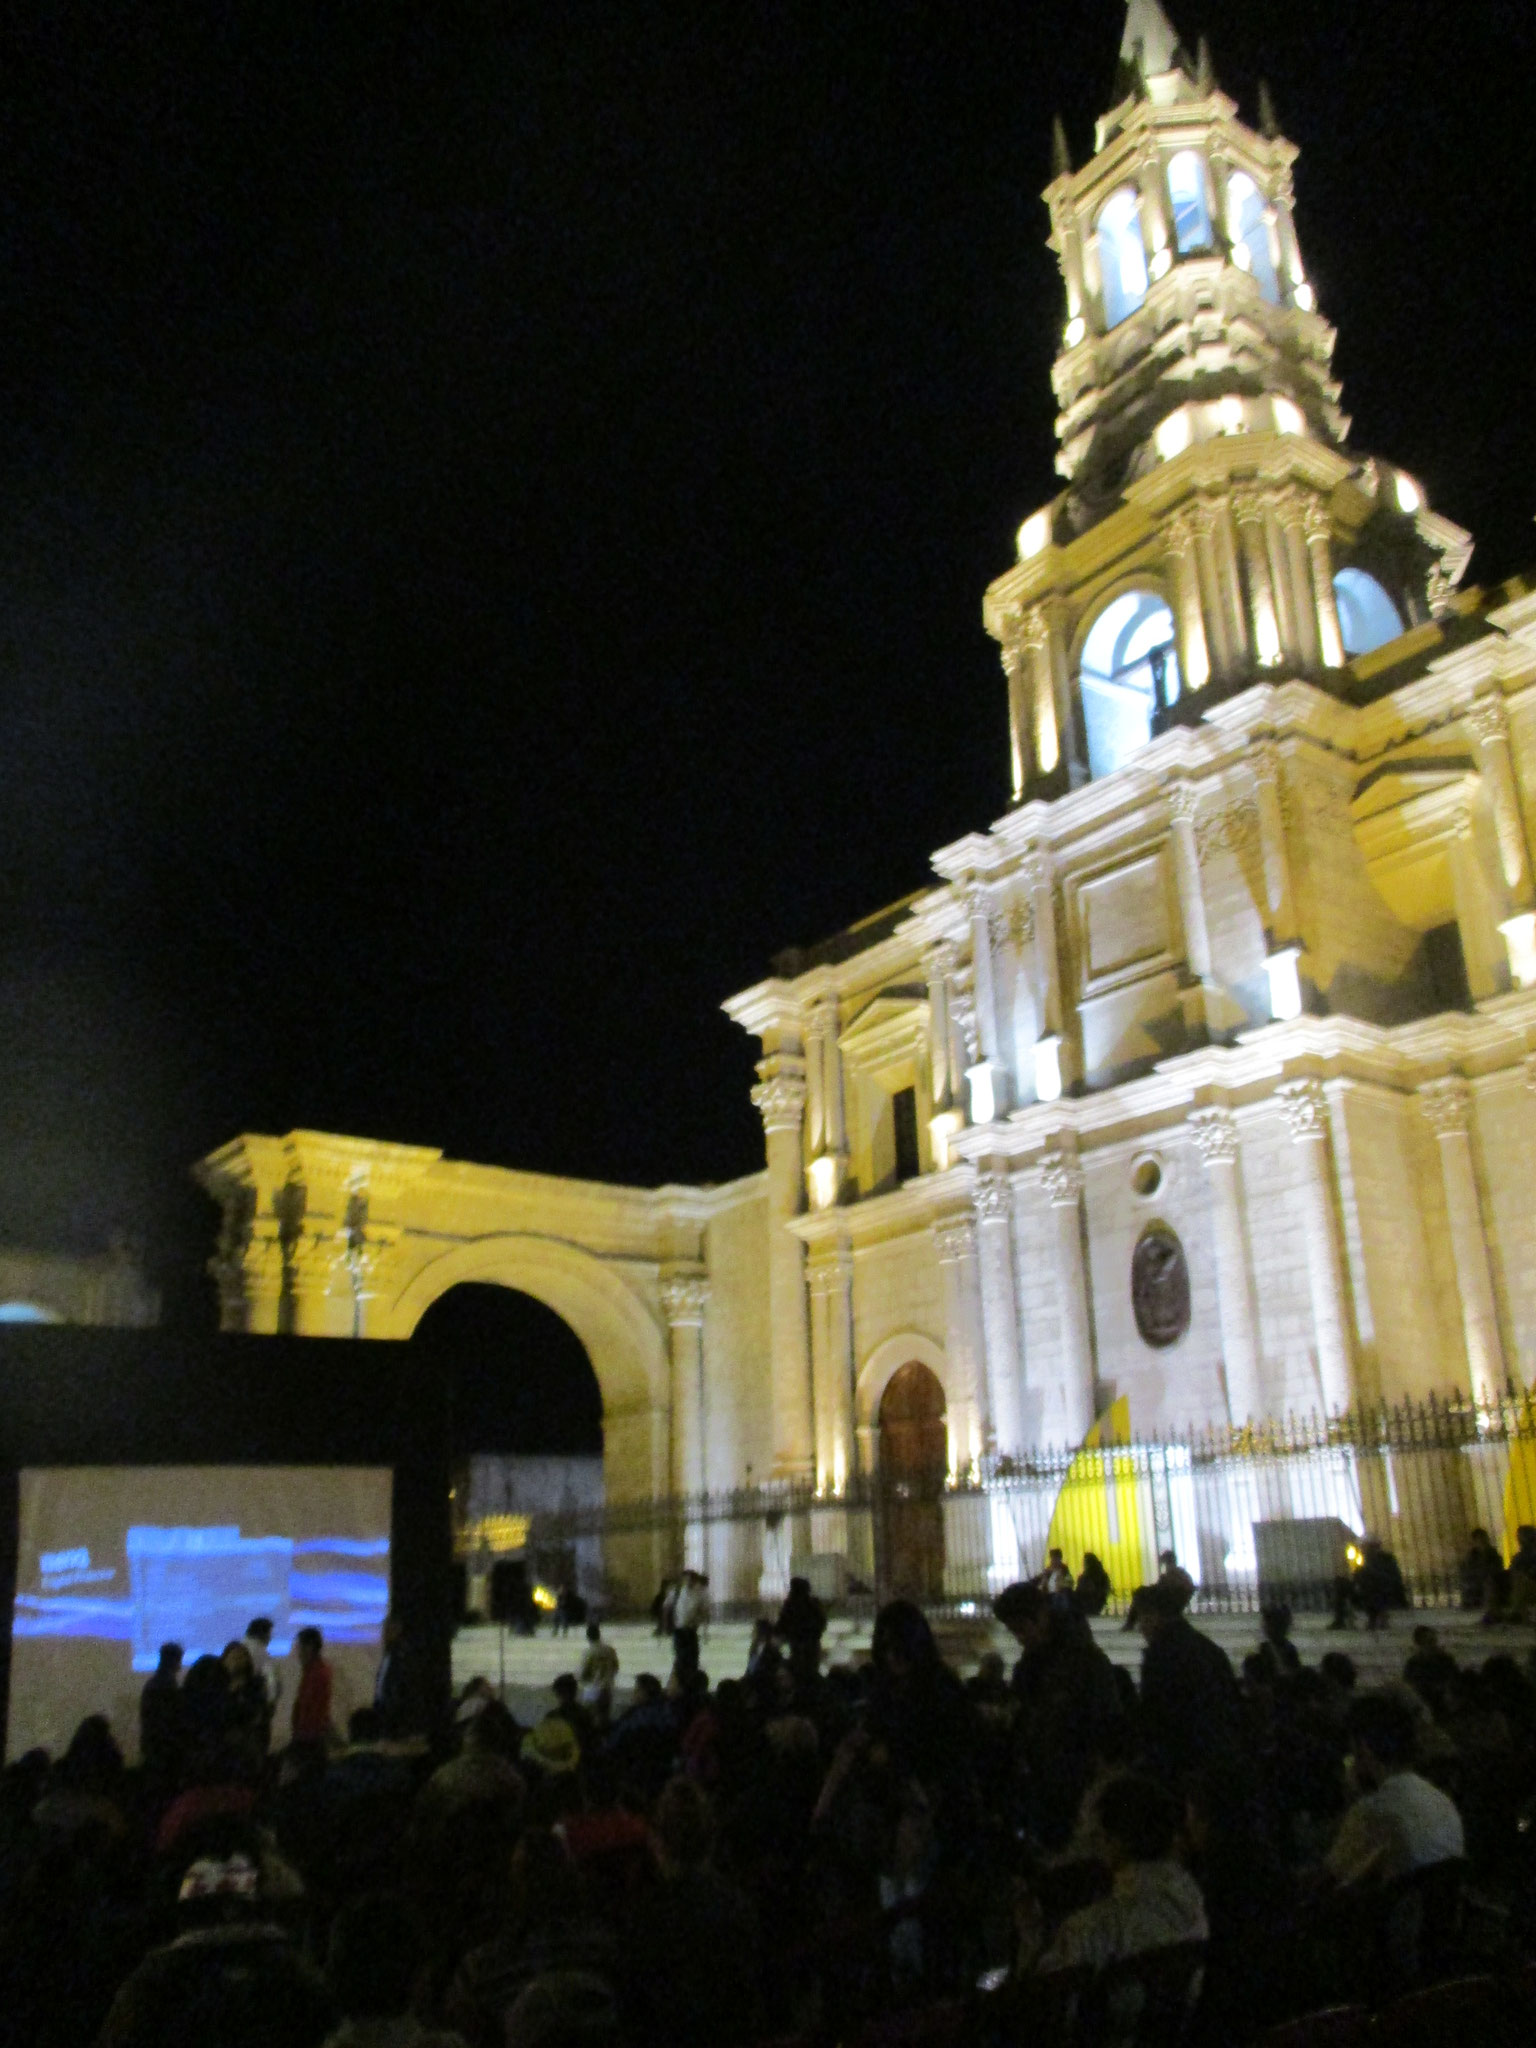 Cinéma de plein air sur la plaza armas